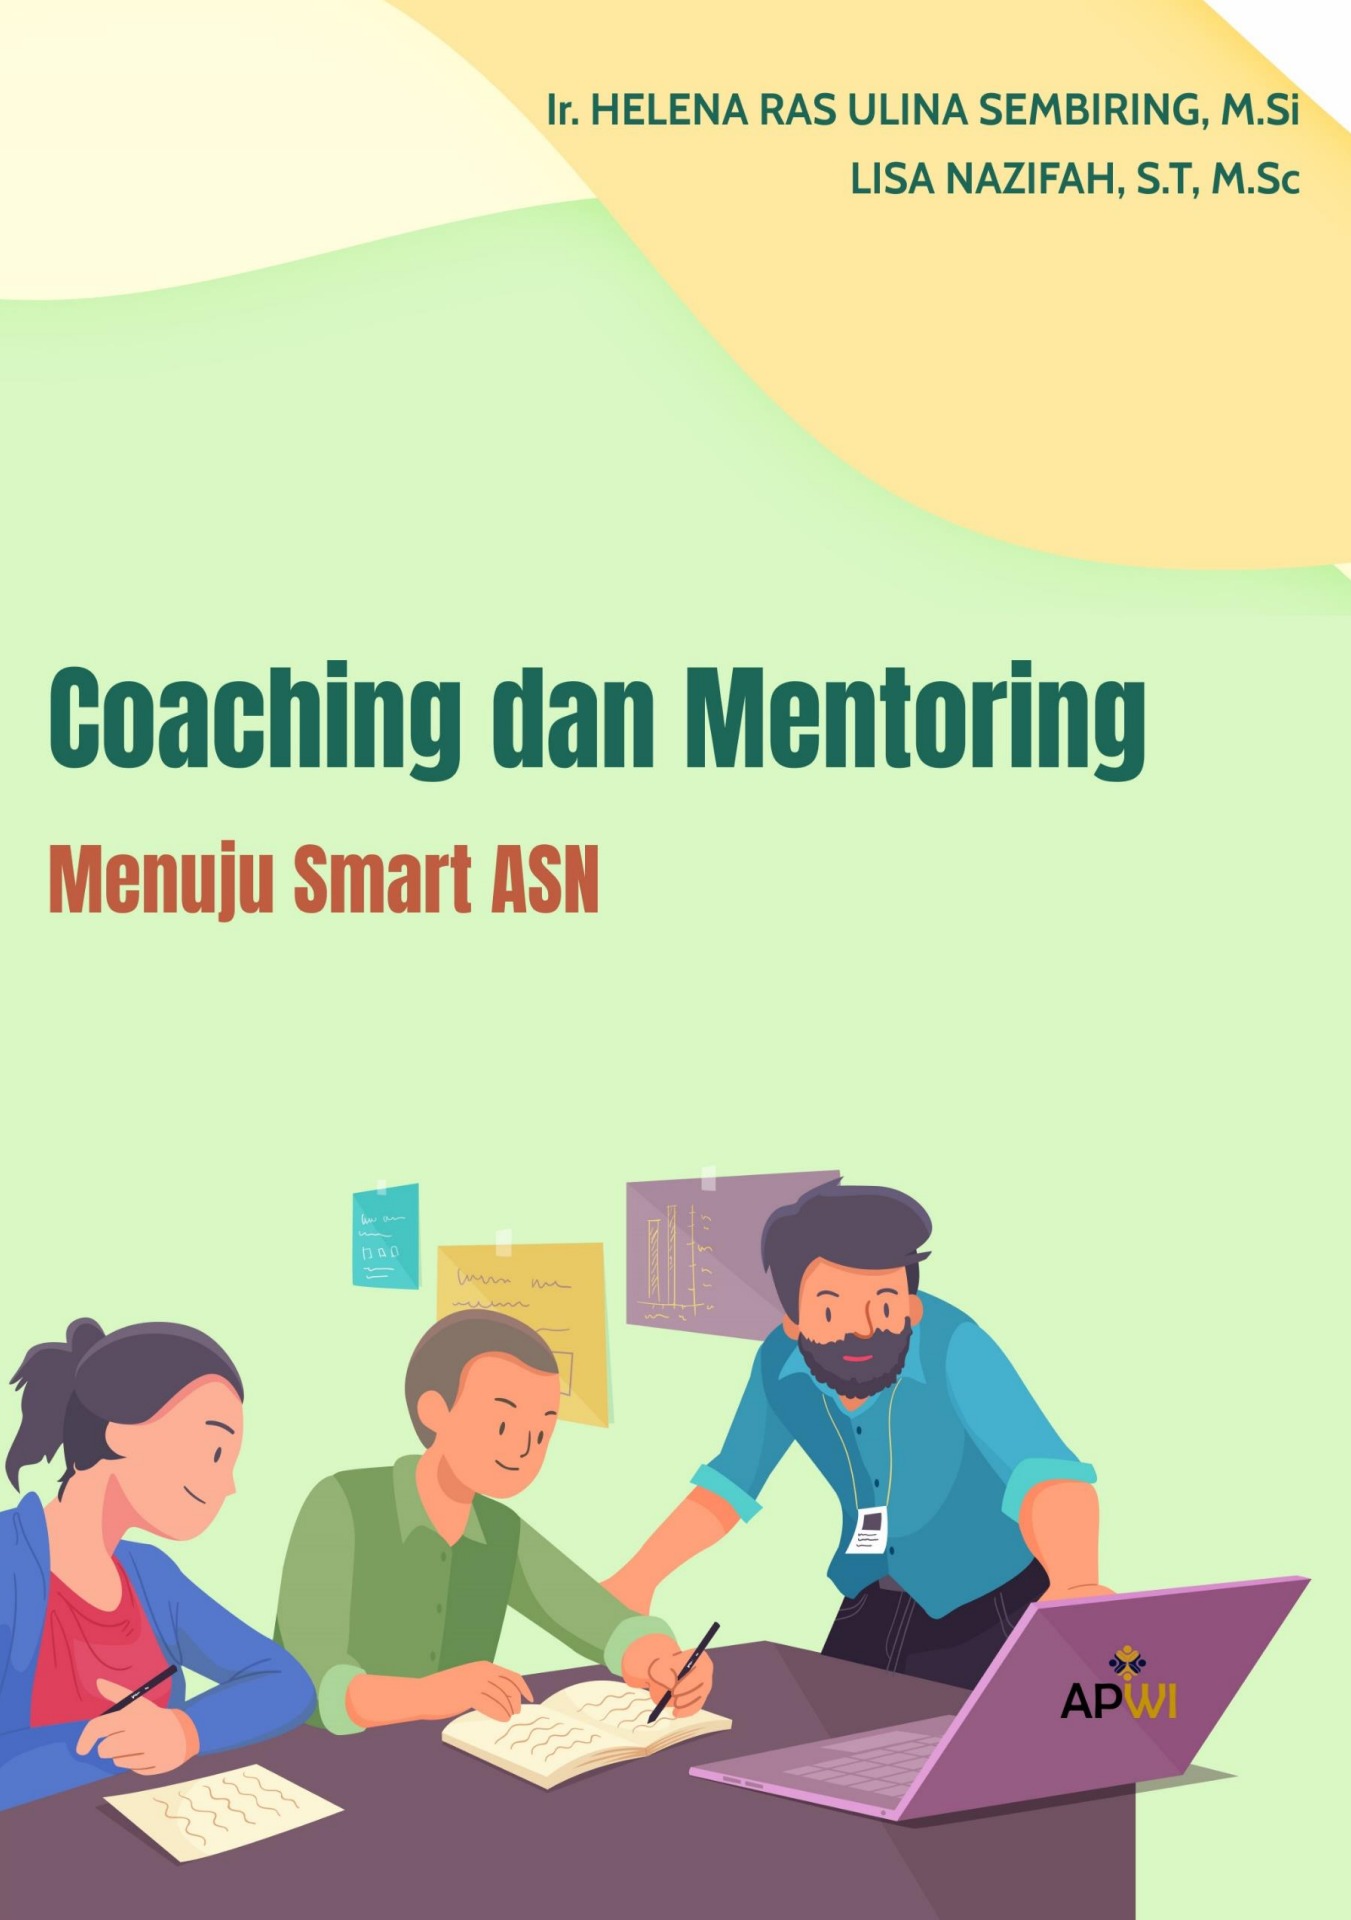 Coaching dan mentoring menuju smart ASN